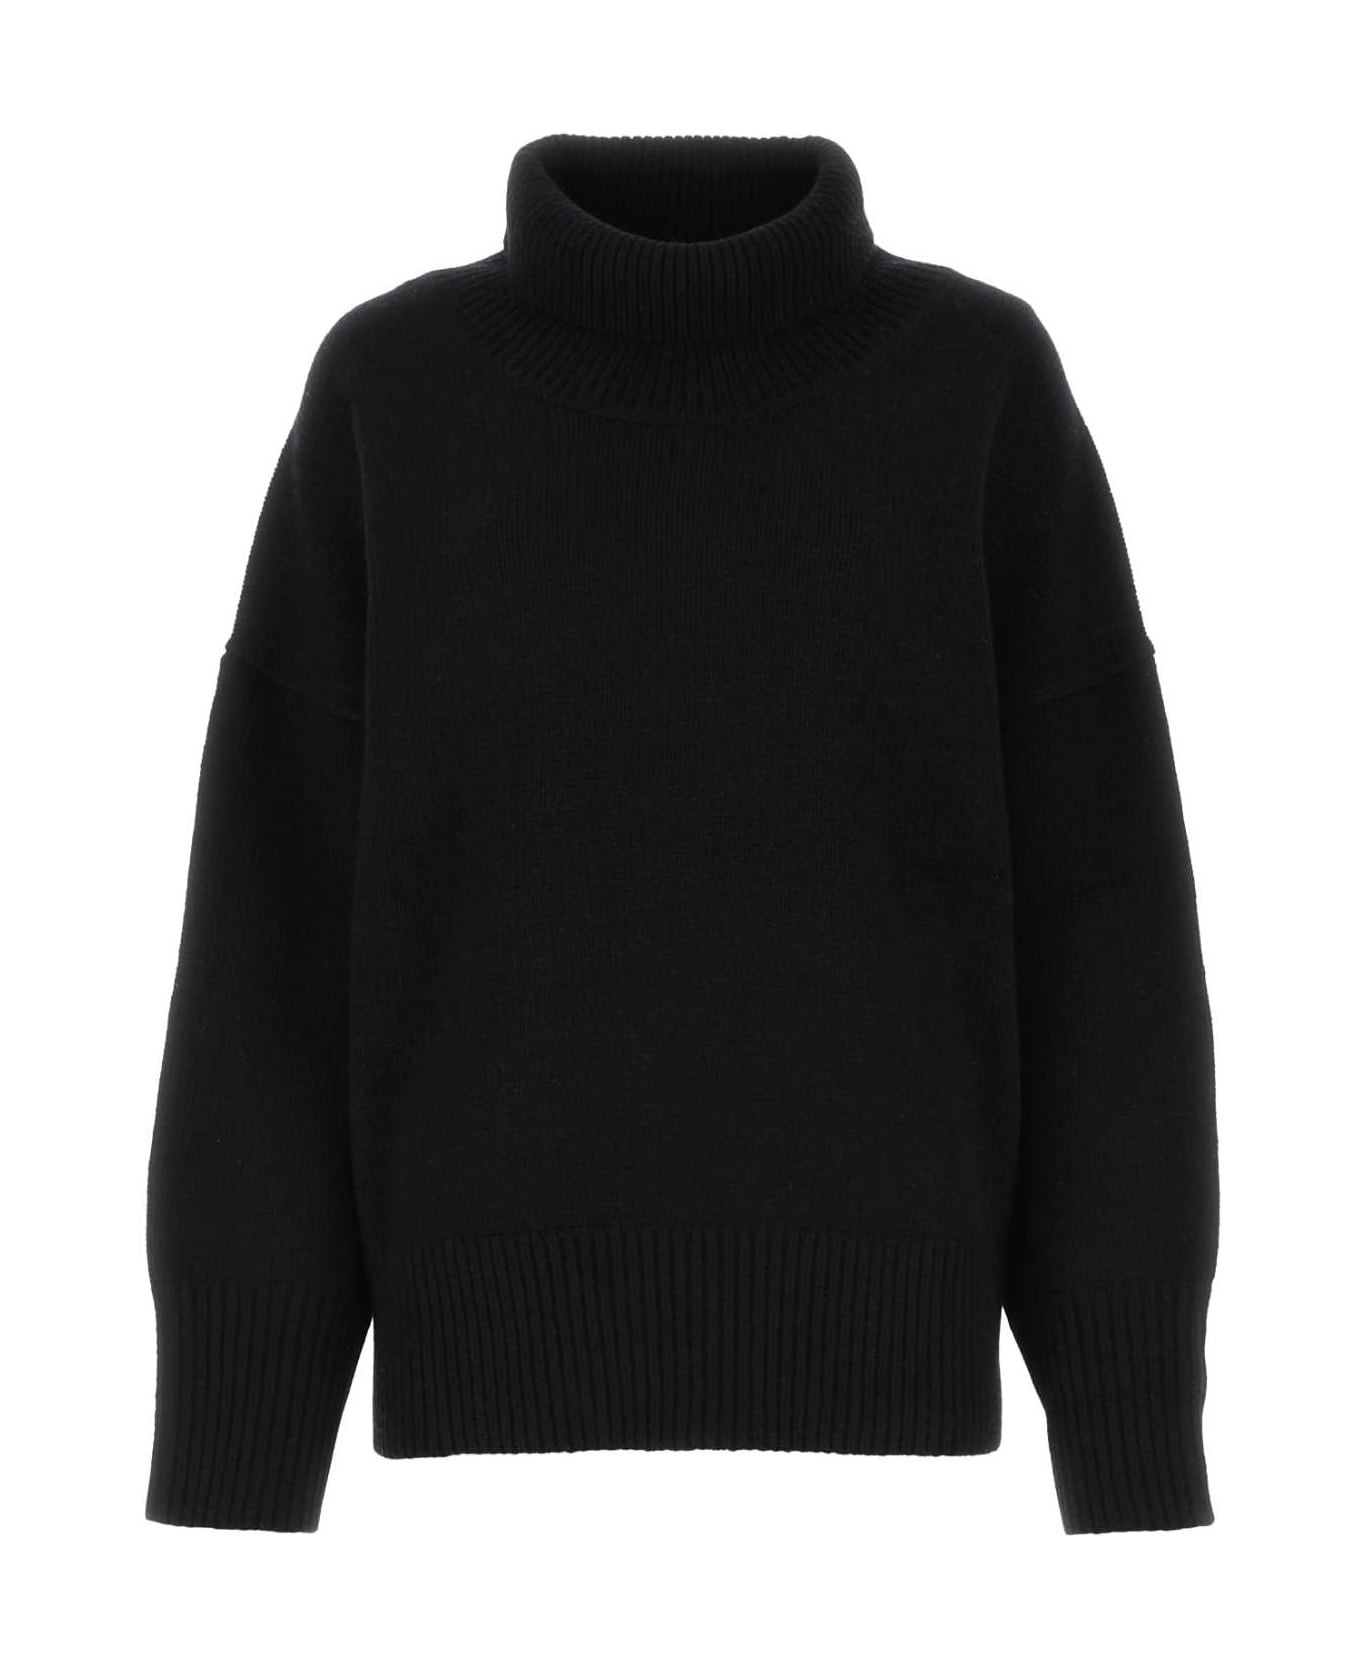 Chloé Black Cashmere Oversize Sweater - 001